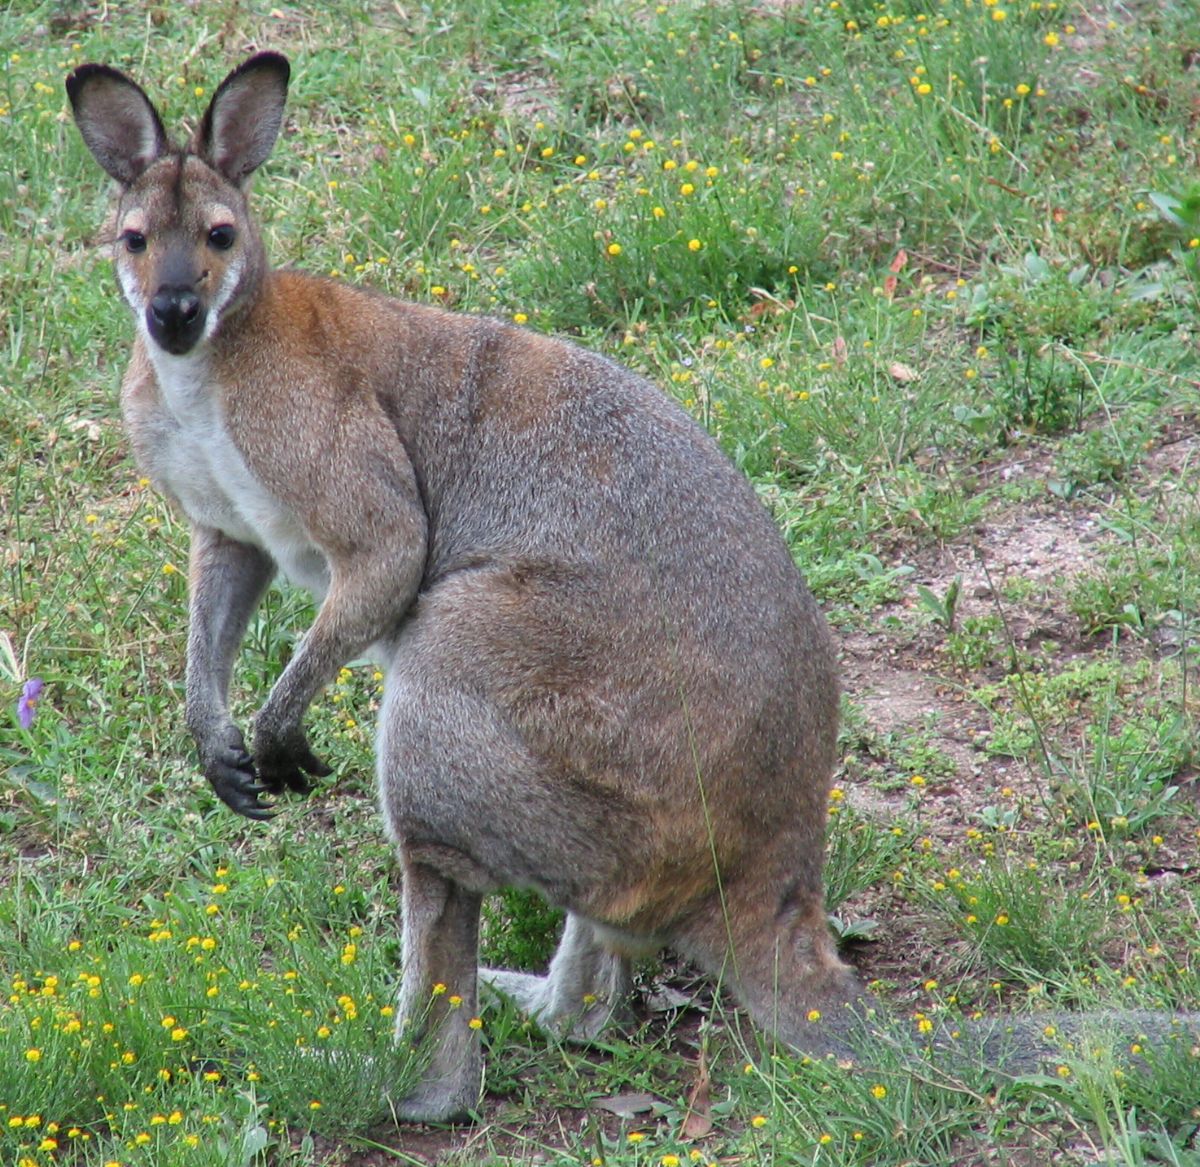 http://www.mark-ju.net/wildlife/images/australia/marsupial01.jpg